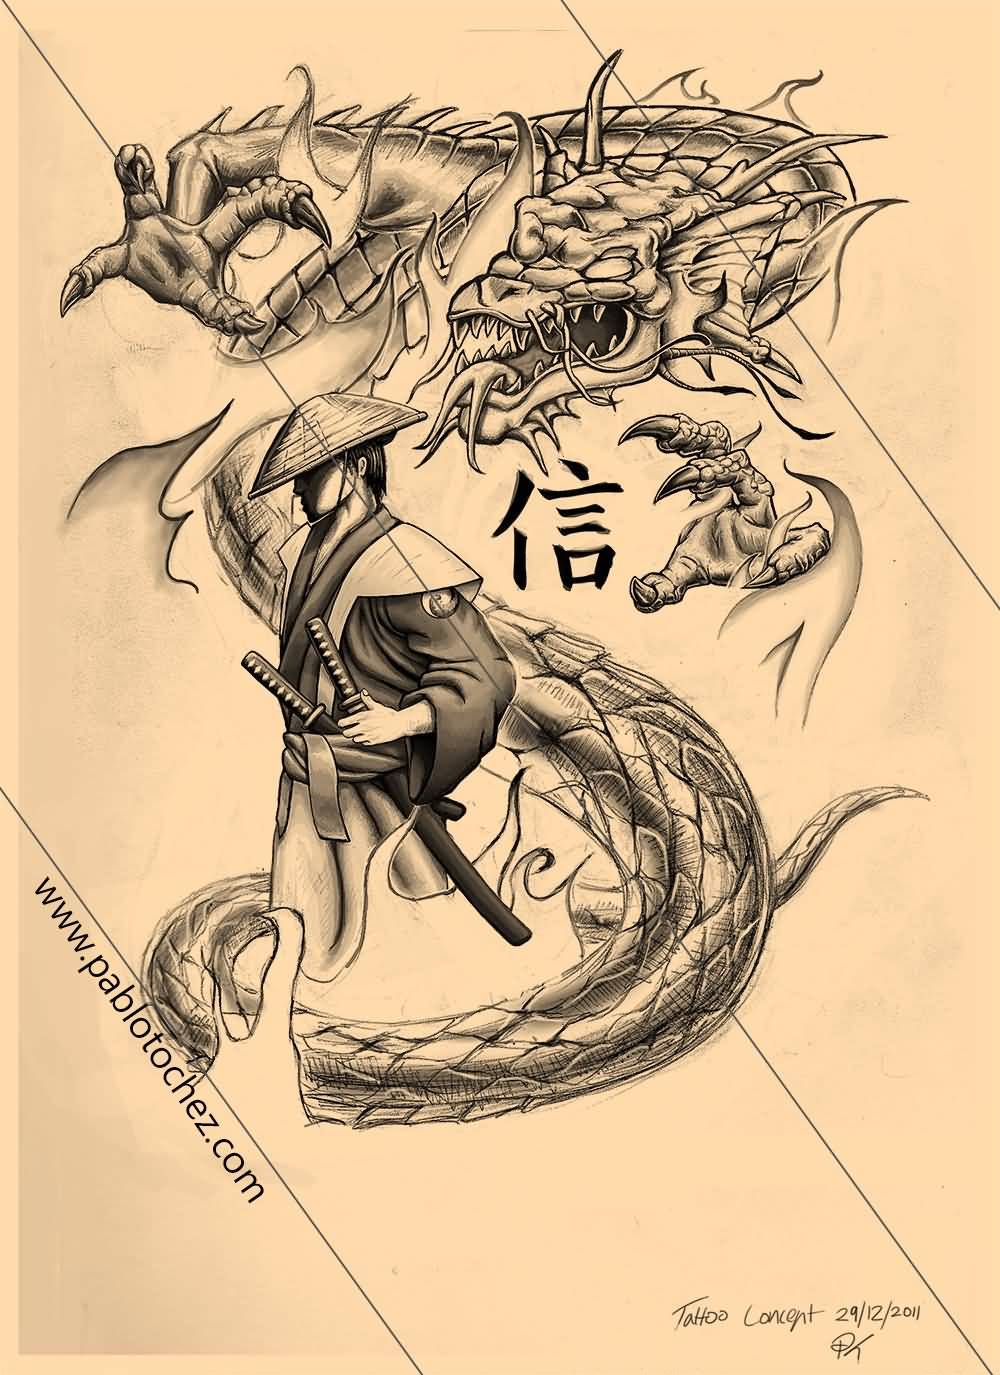 Cool Black And Grey Samurai With Dragon Tattoo Design